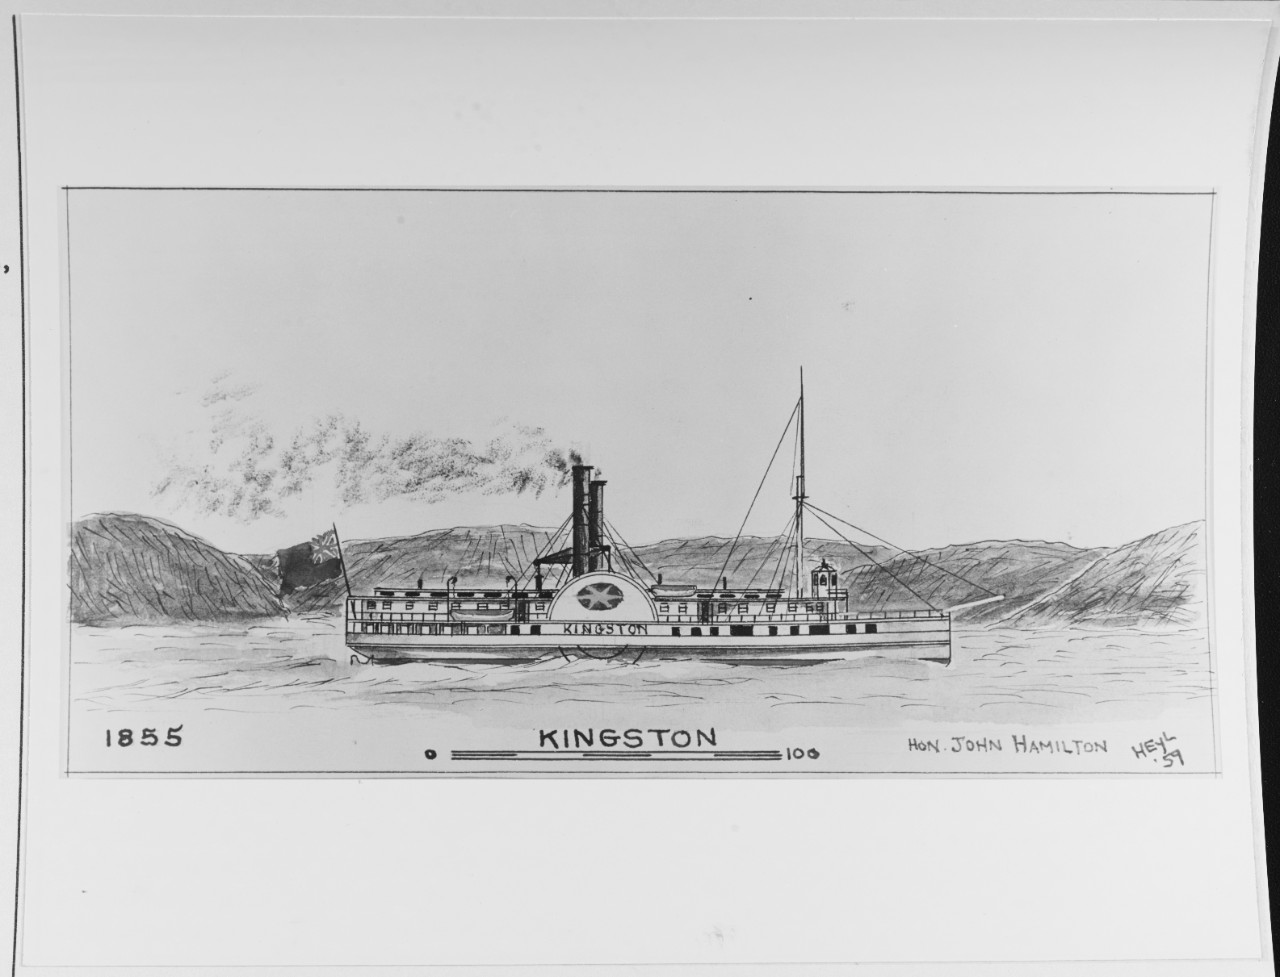 KINGSTON (Canadian merchant steamer, 1855-1872)